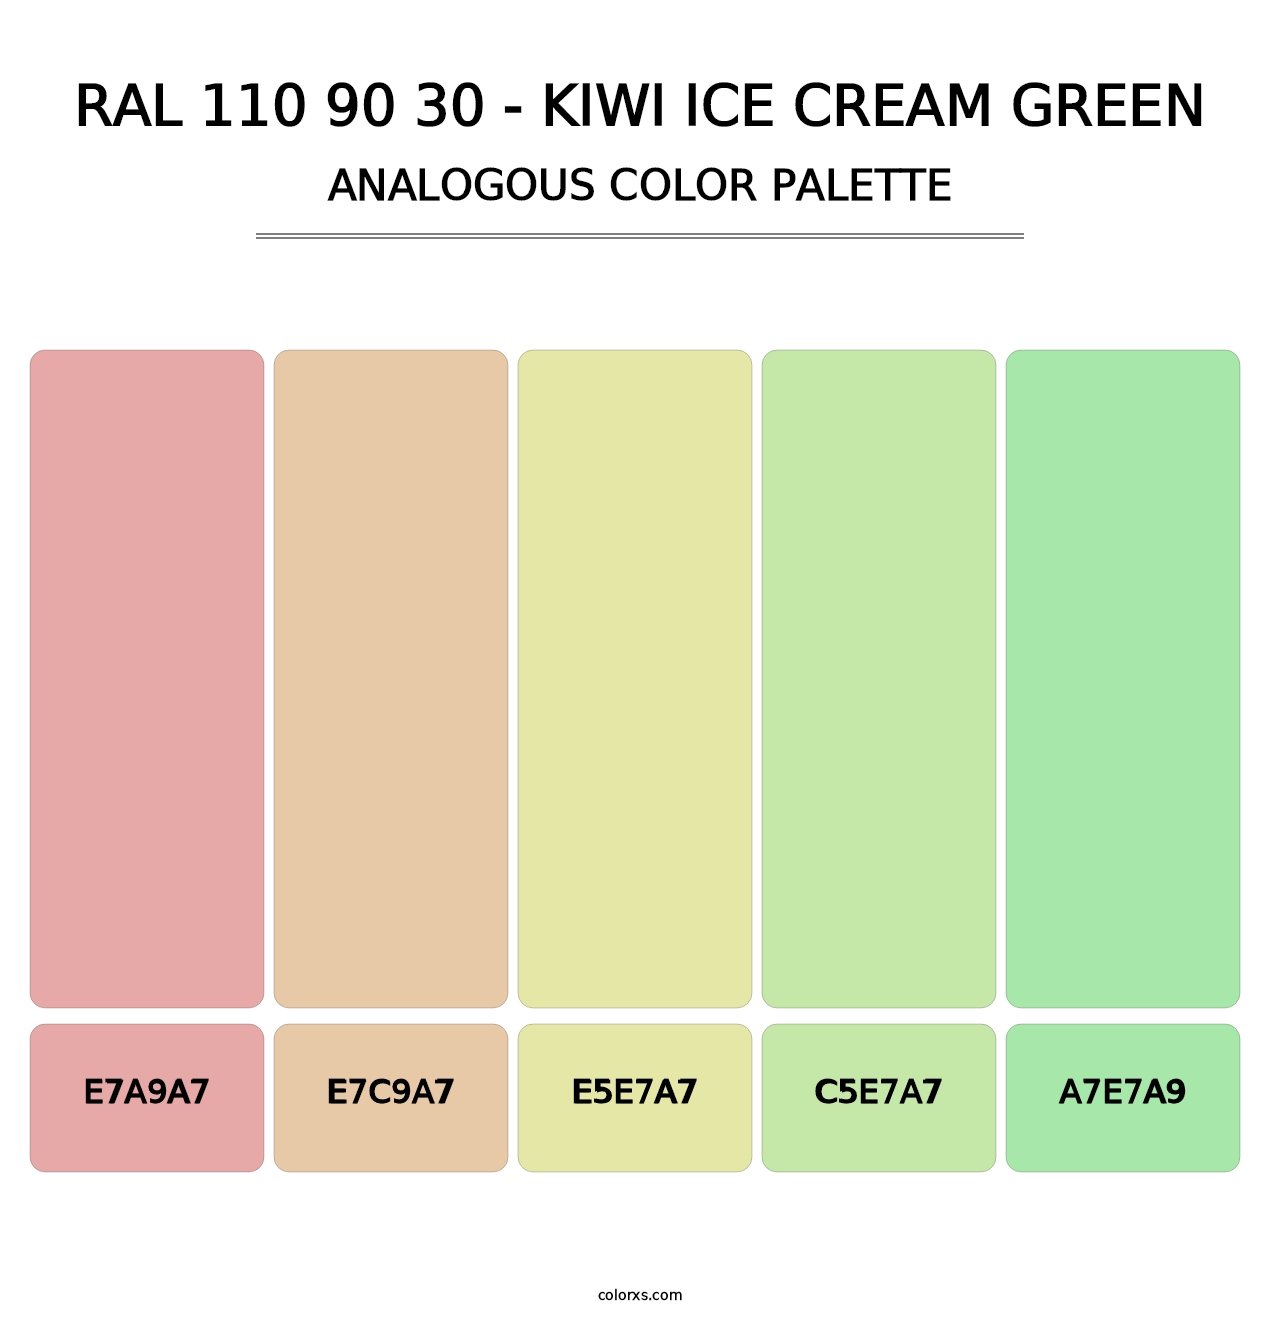 RAL 110 90 30 - Kiwi Ice Cream Green - Analogous Color Palette